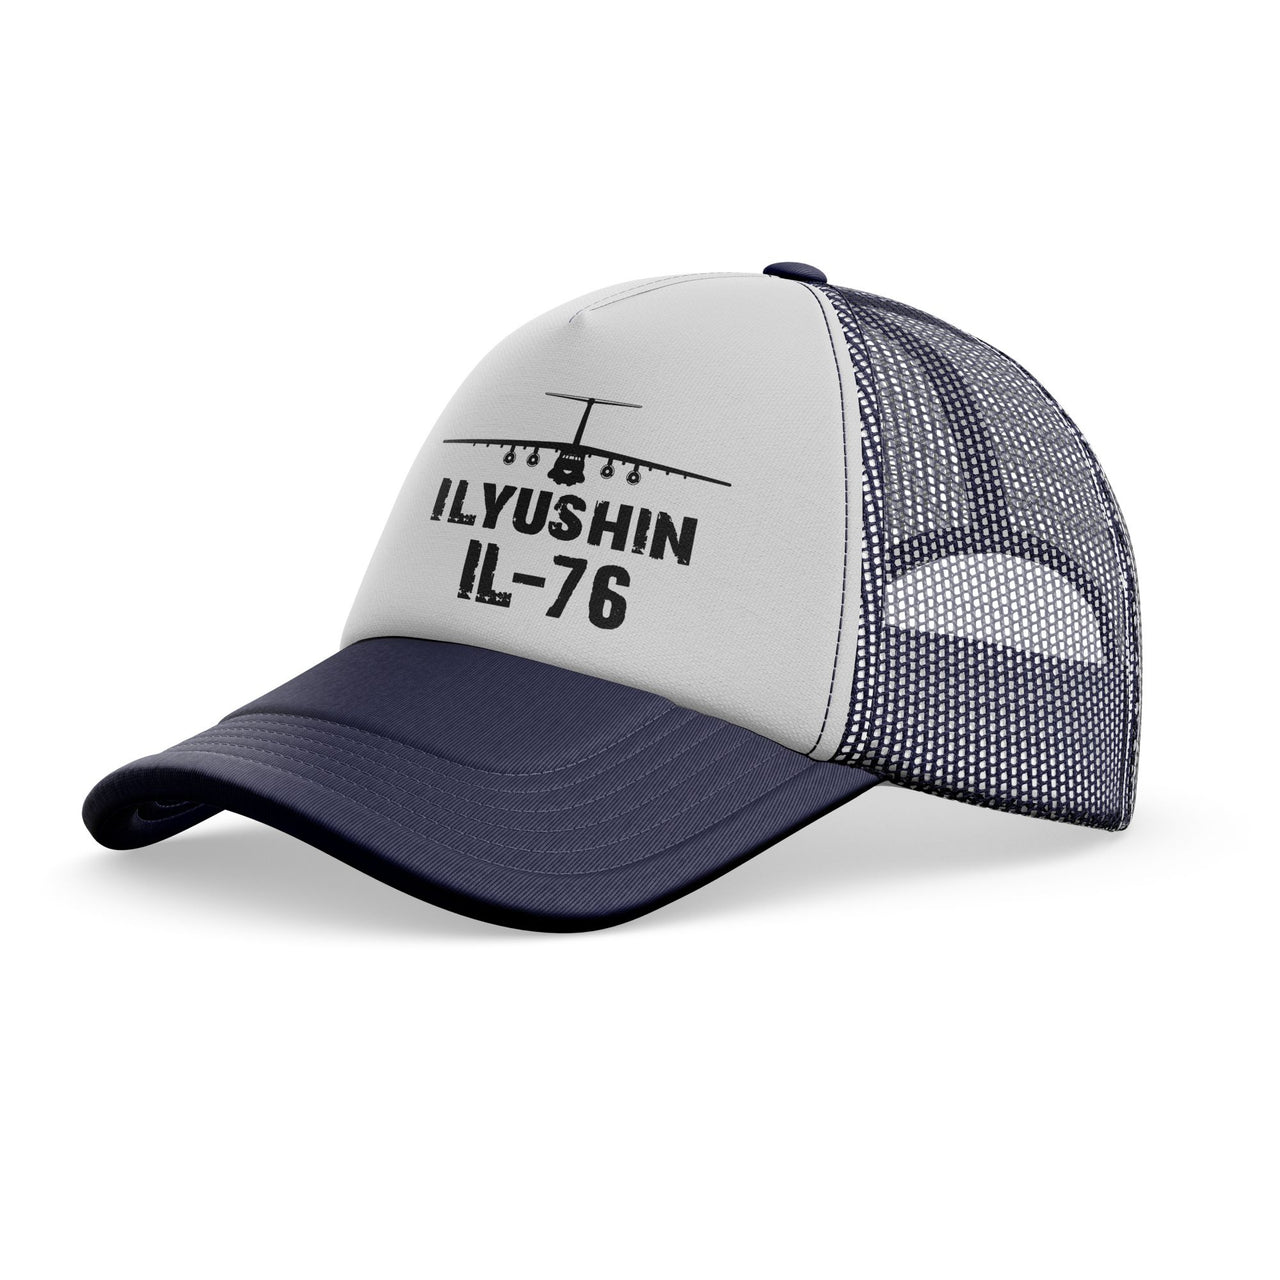 ILyushin IL-76 & Plane Designed Trucker Caps & Hats